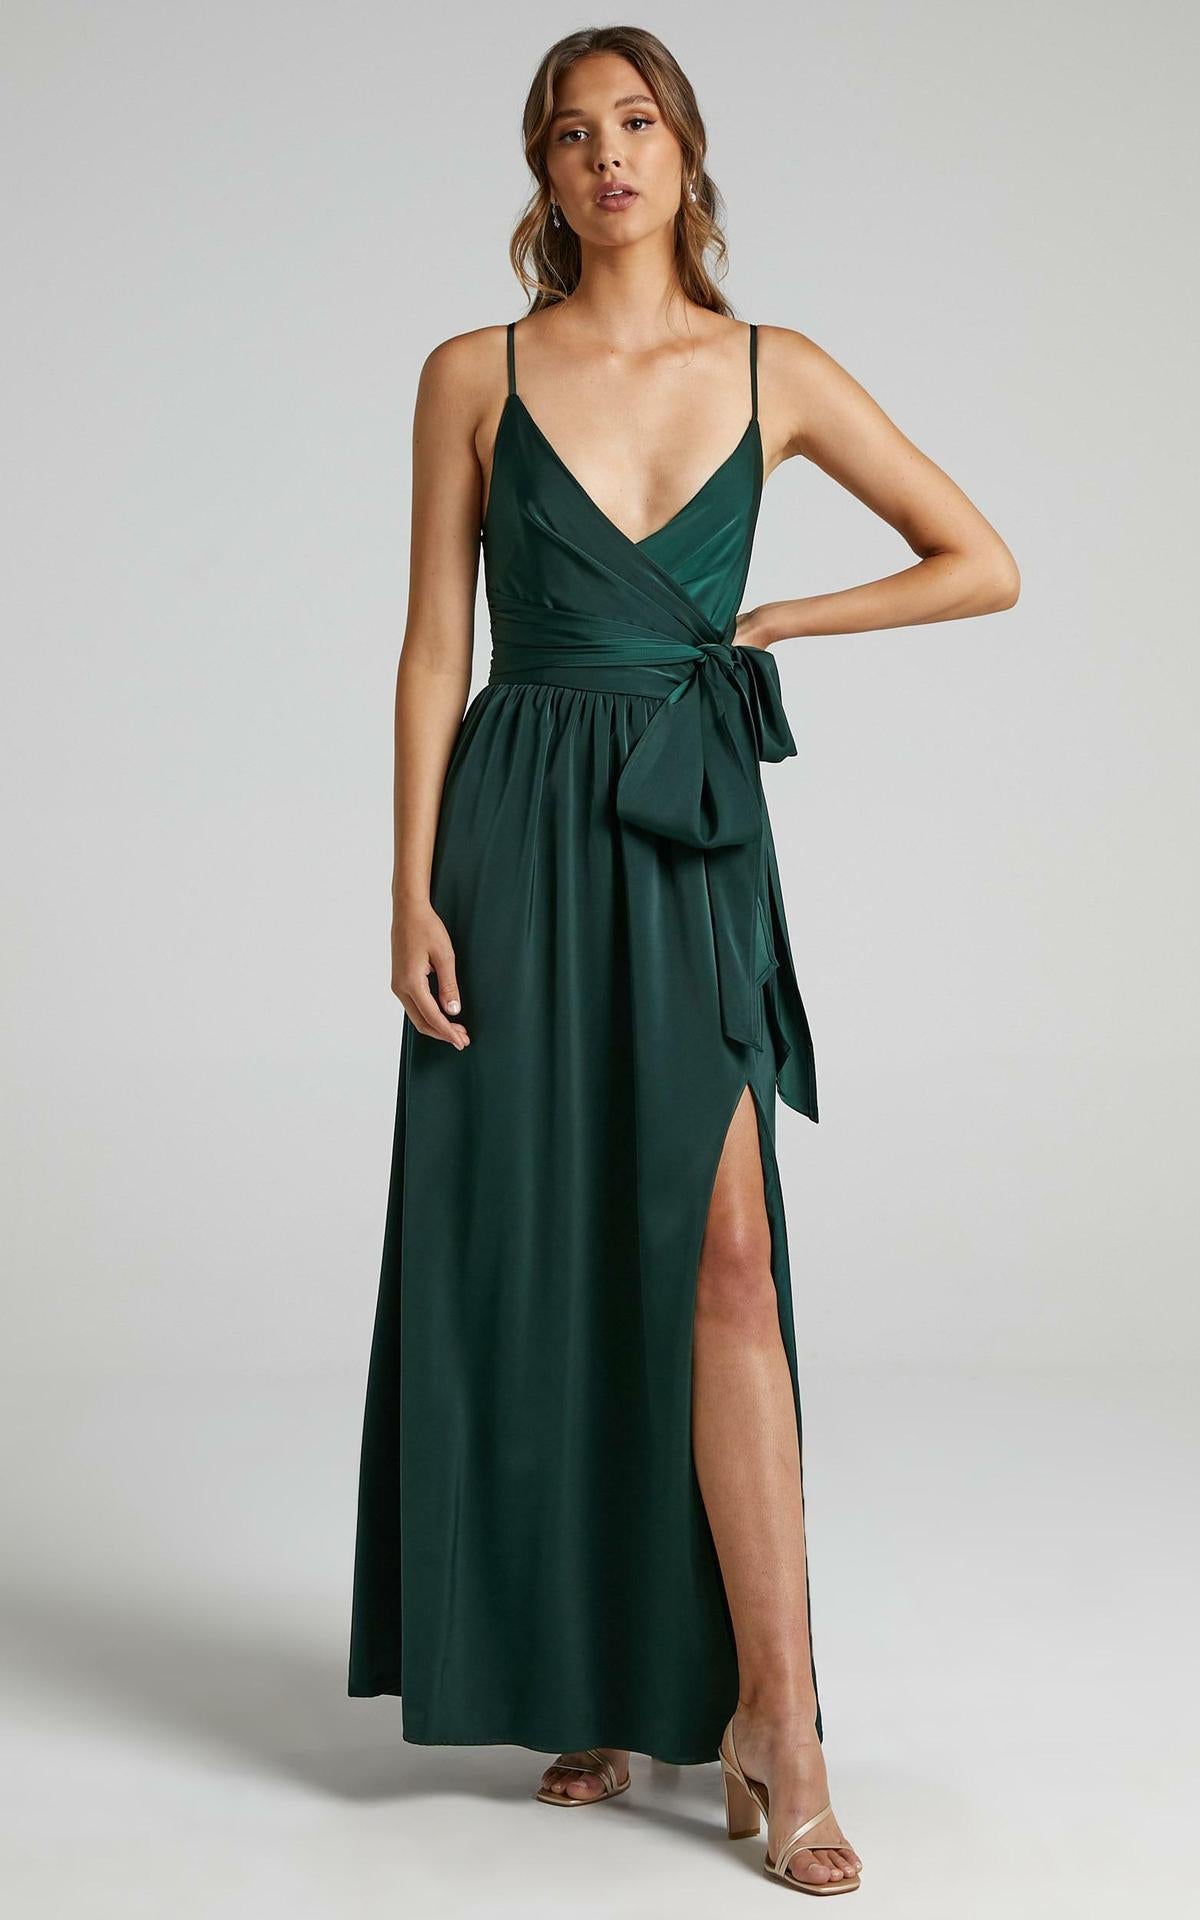 Sexy Satin Sleeveless Party Dresses-Dresses-Green-S-Free Shipping Leatheretro